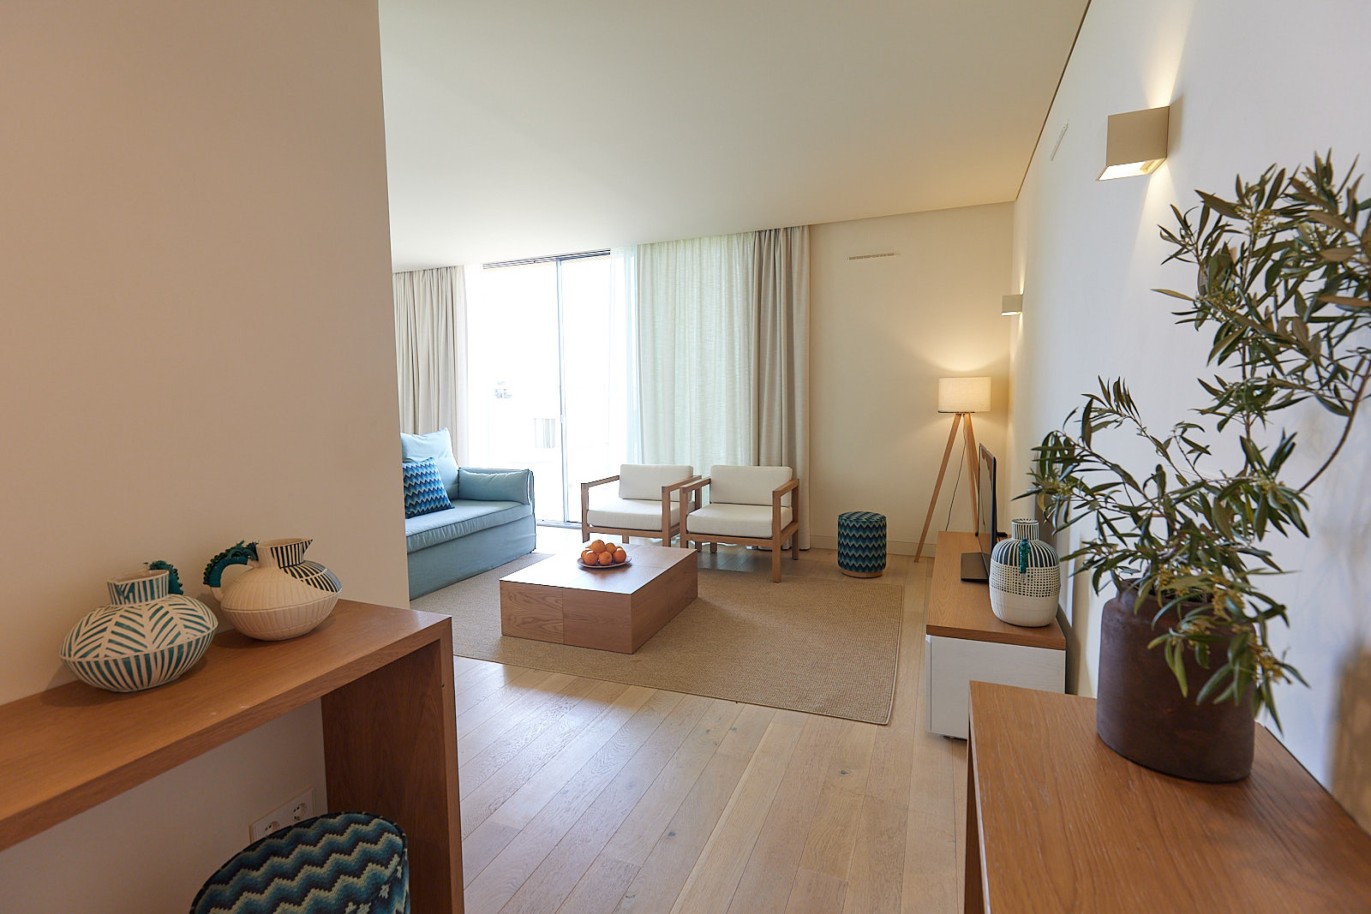 2 bedroom apartment in resort, for sale in Porches, Algarve_228835